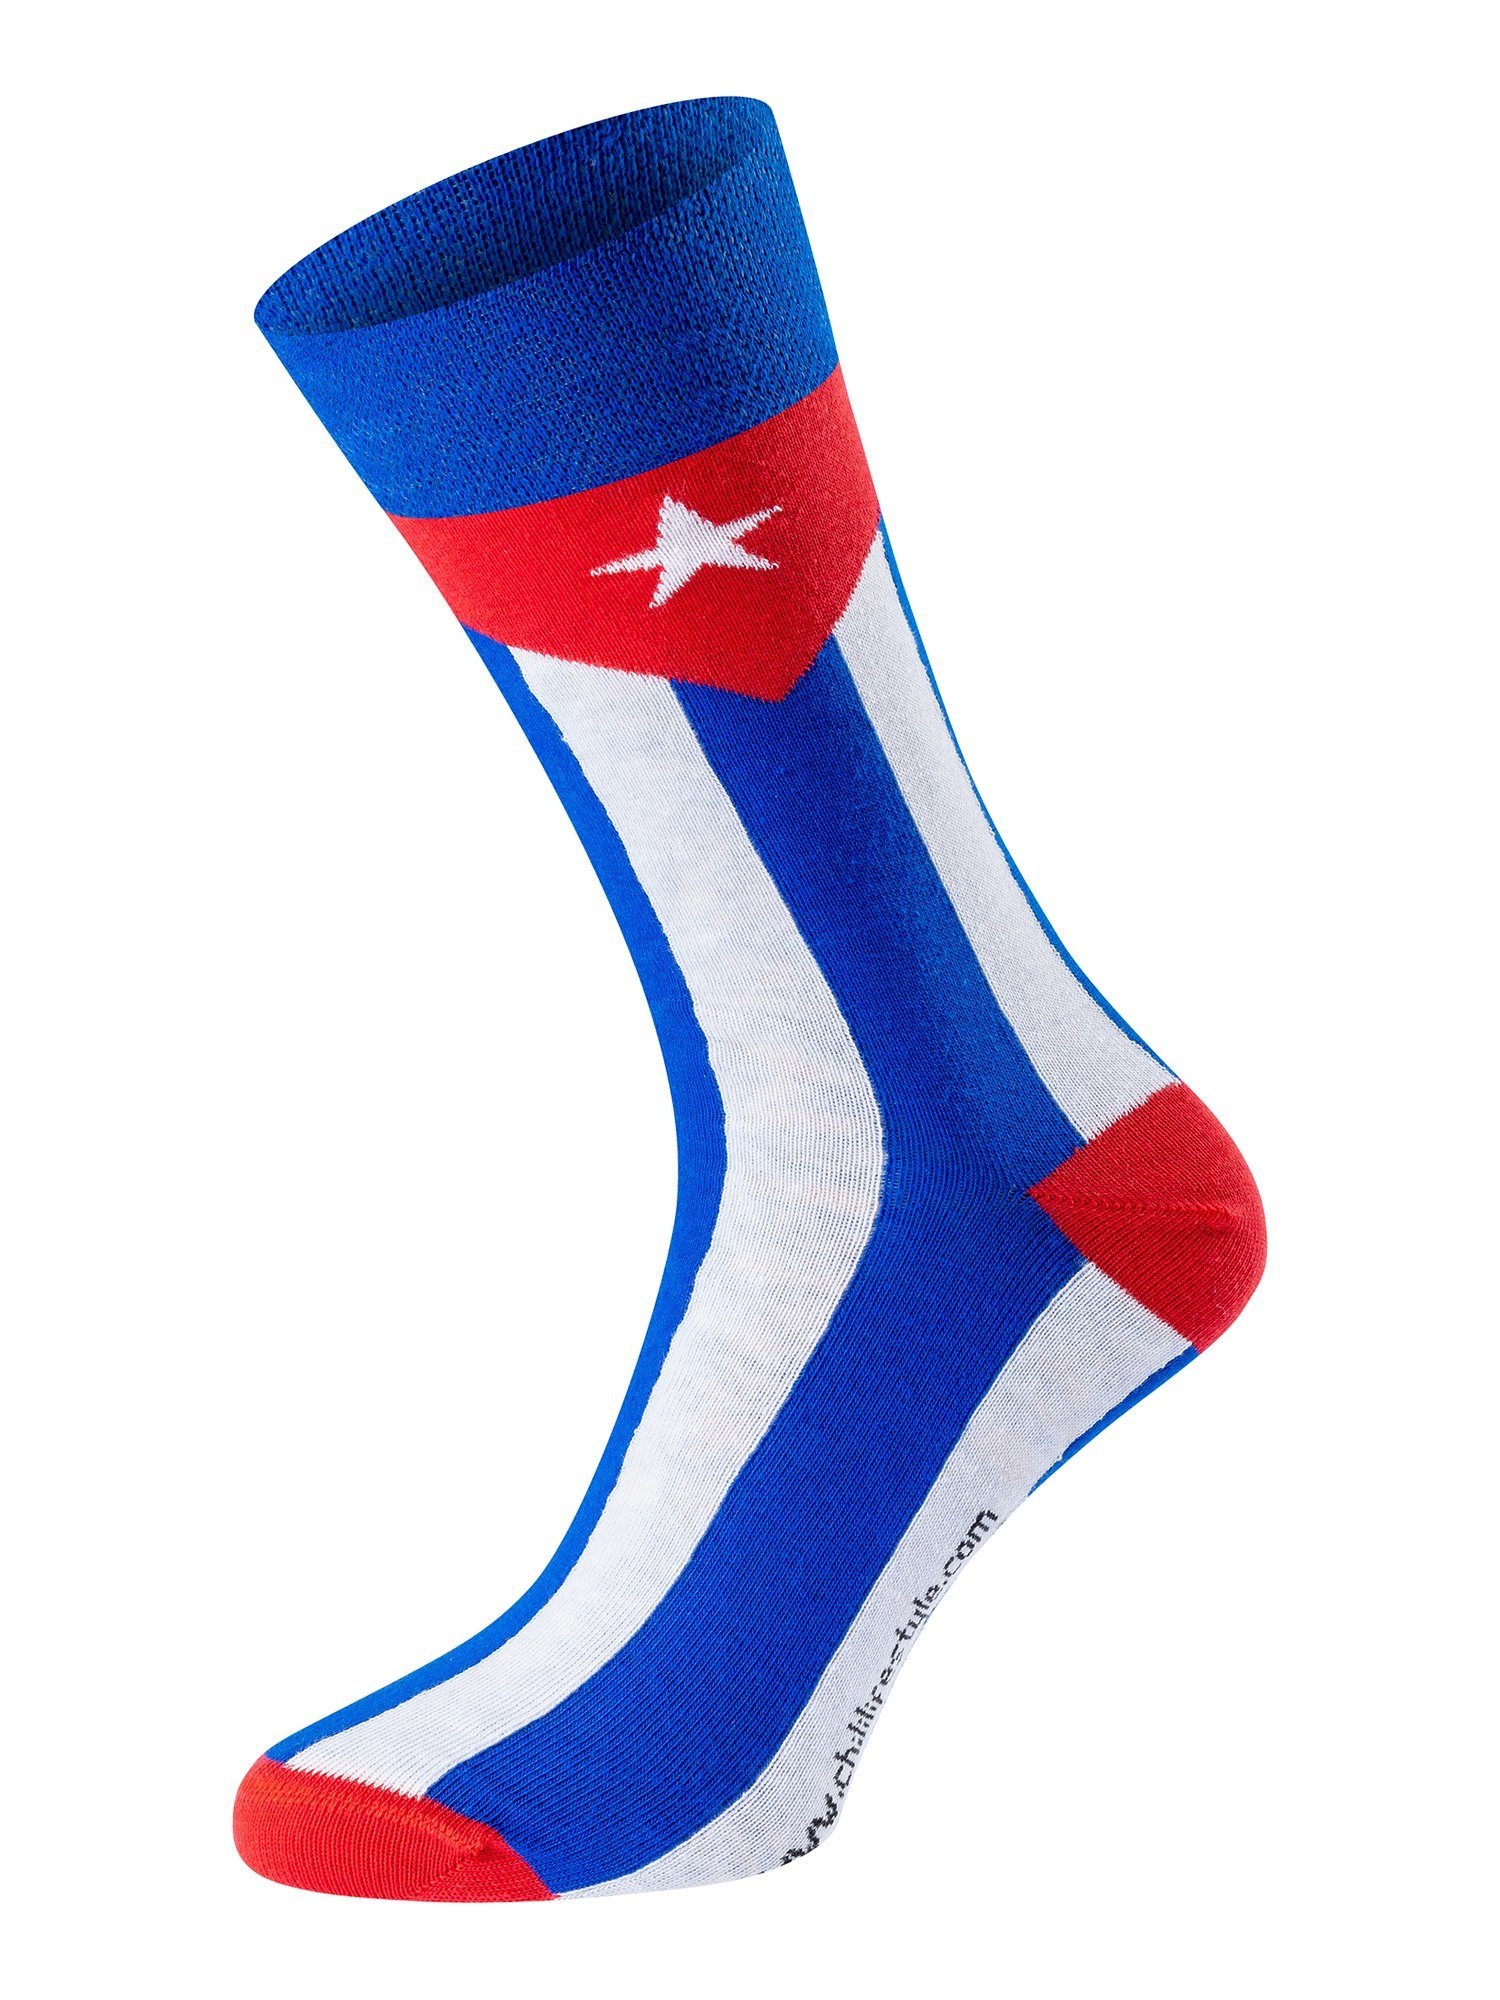 Chili Lifestyle Freizeitsocken Banderole Leisure Socks Fidel